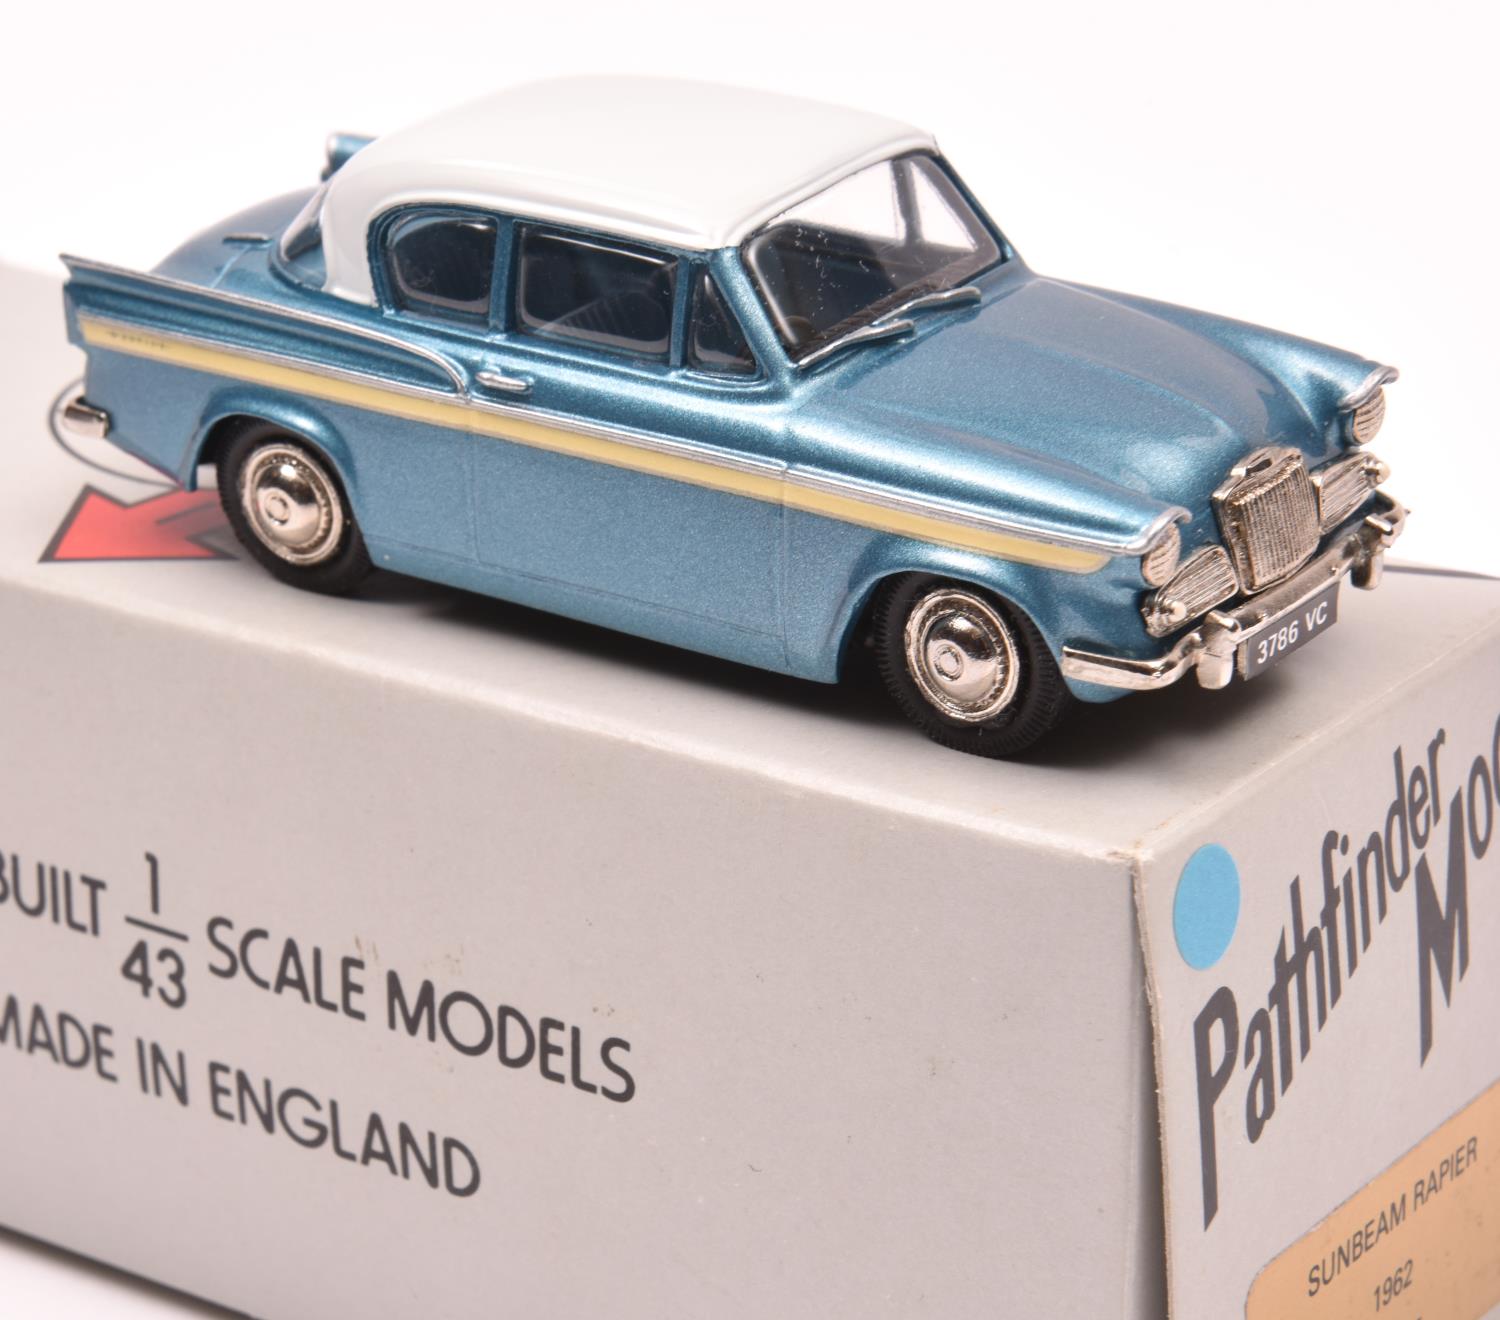 Pathfinder Models PFM 15 1962 Sunbeam Rapier. In metallic sky blue with white roof and light blue